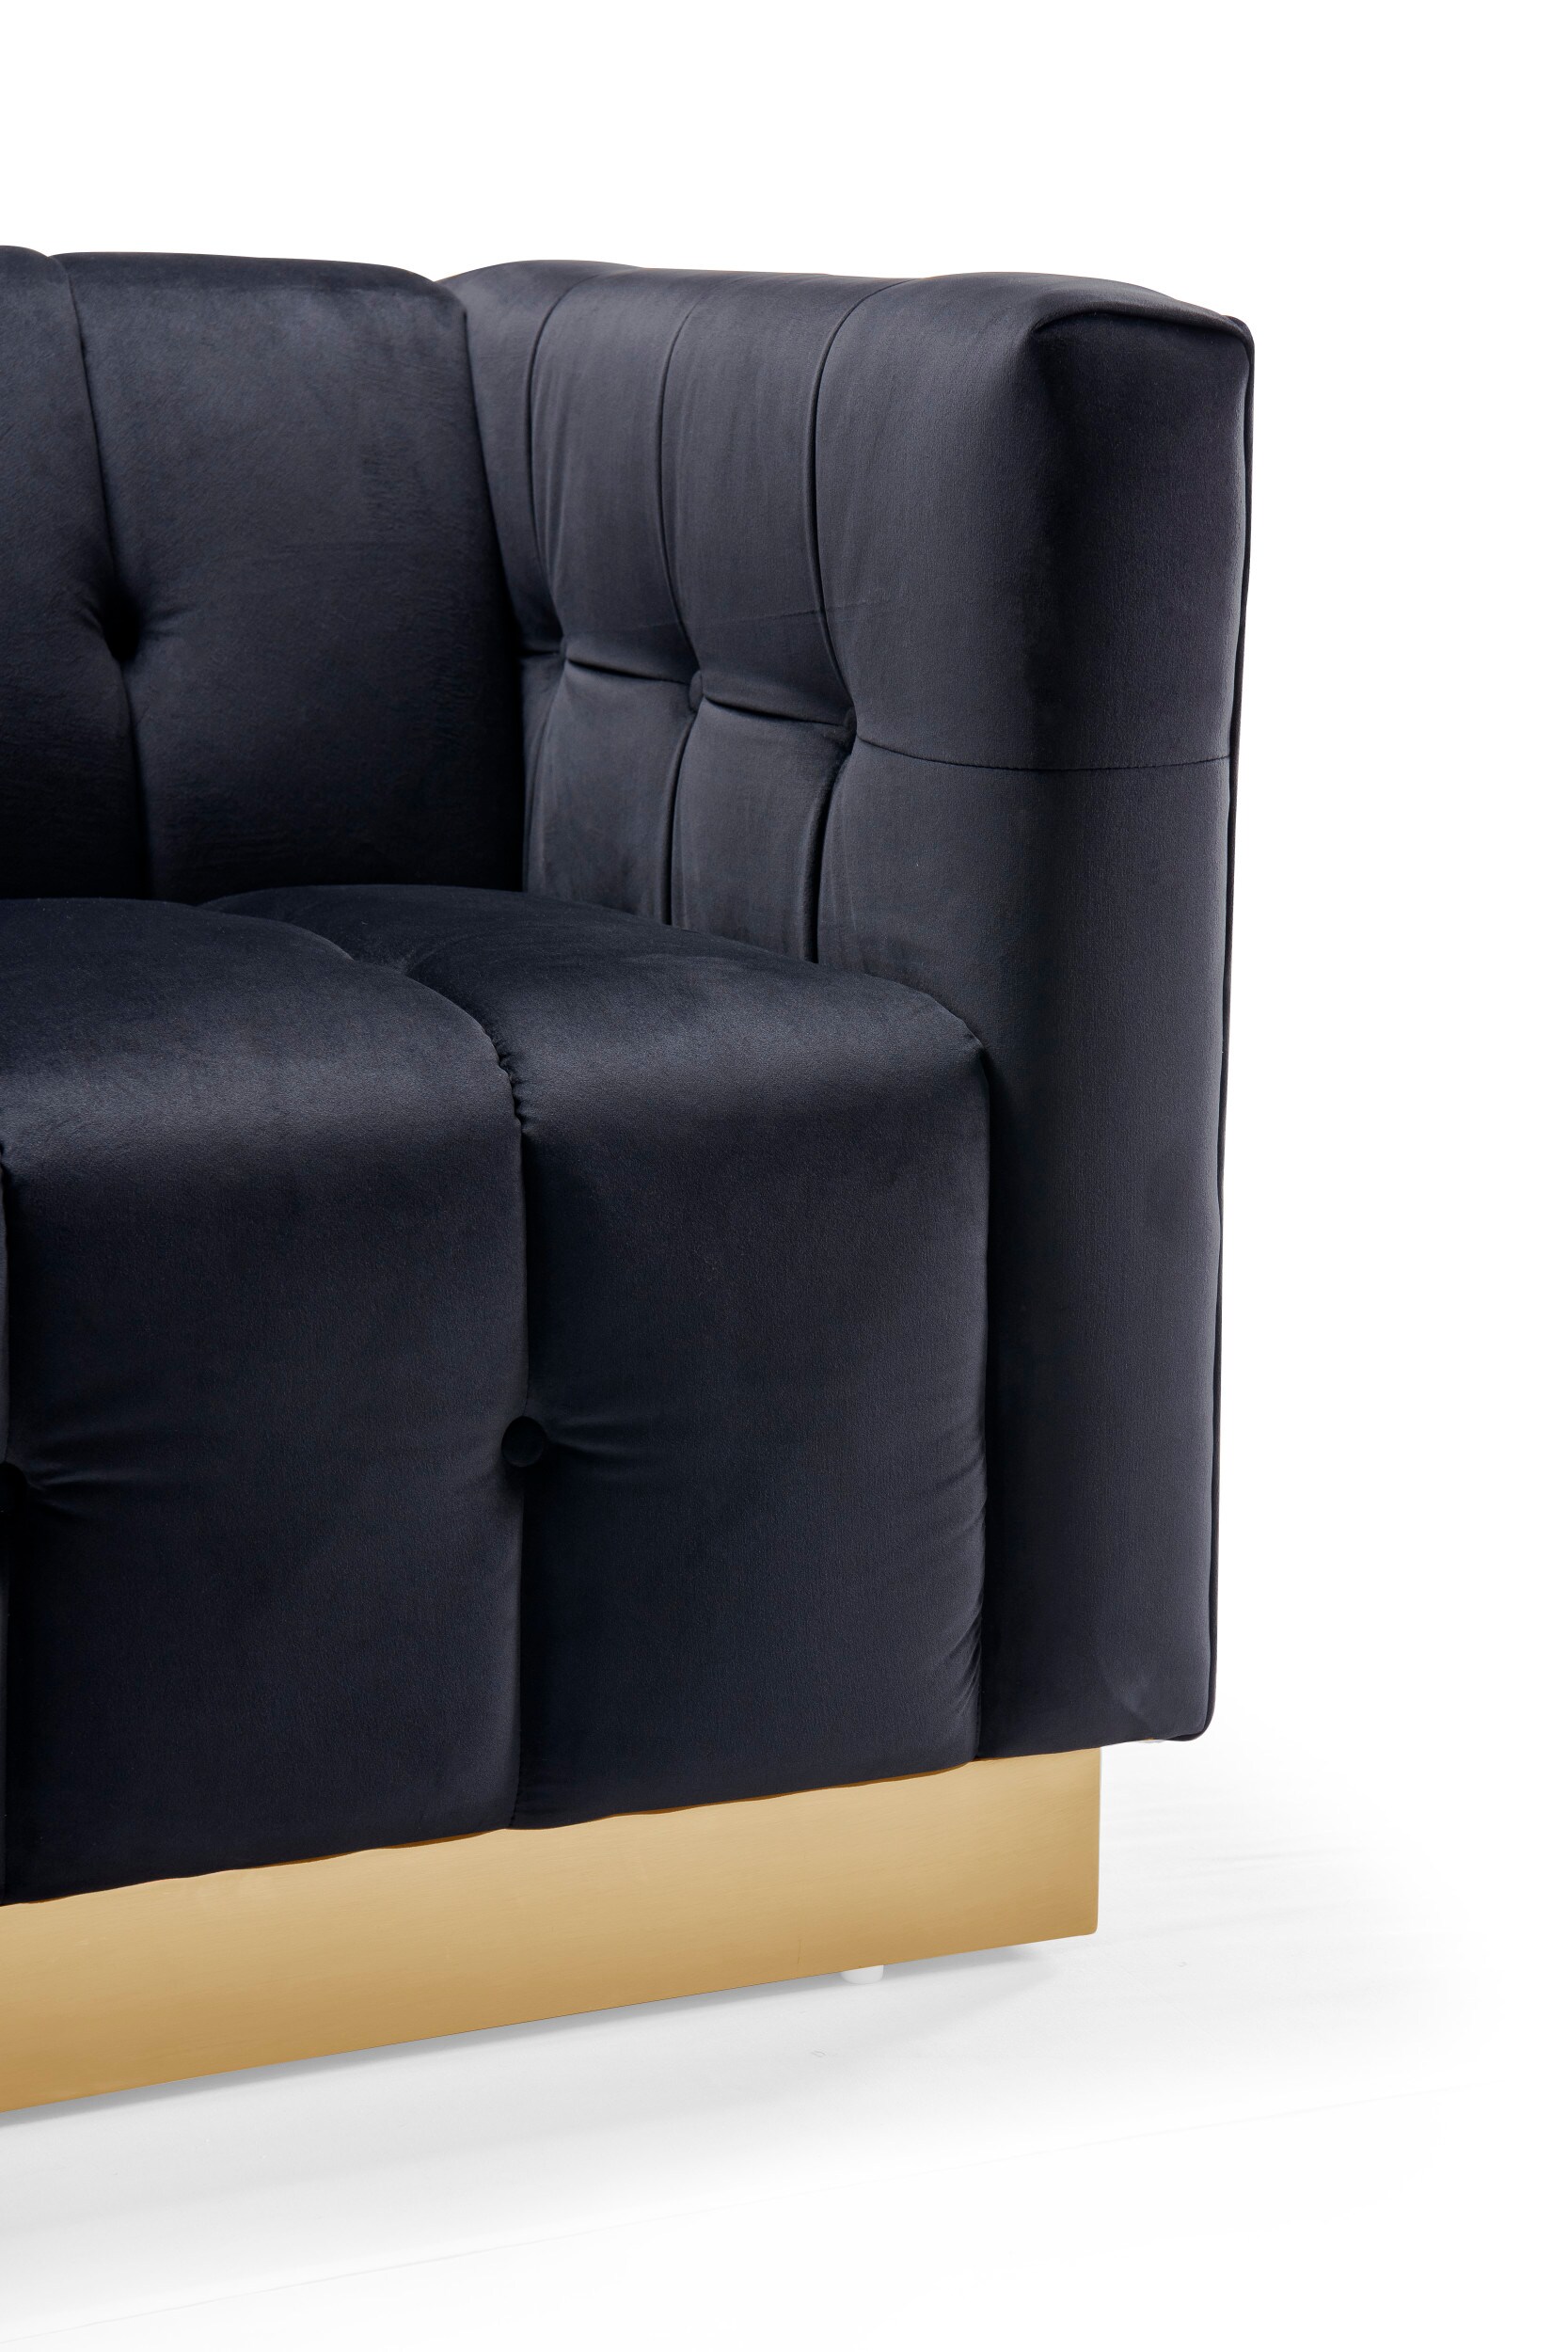 LOUIS modern black upholstered glamour - Primavera Home